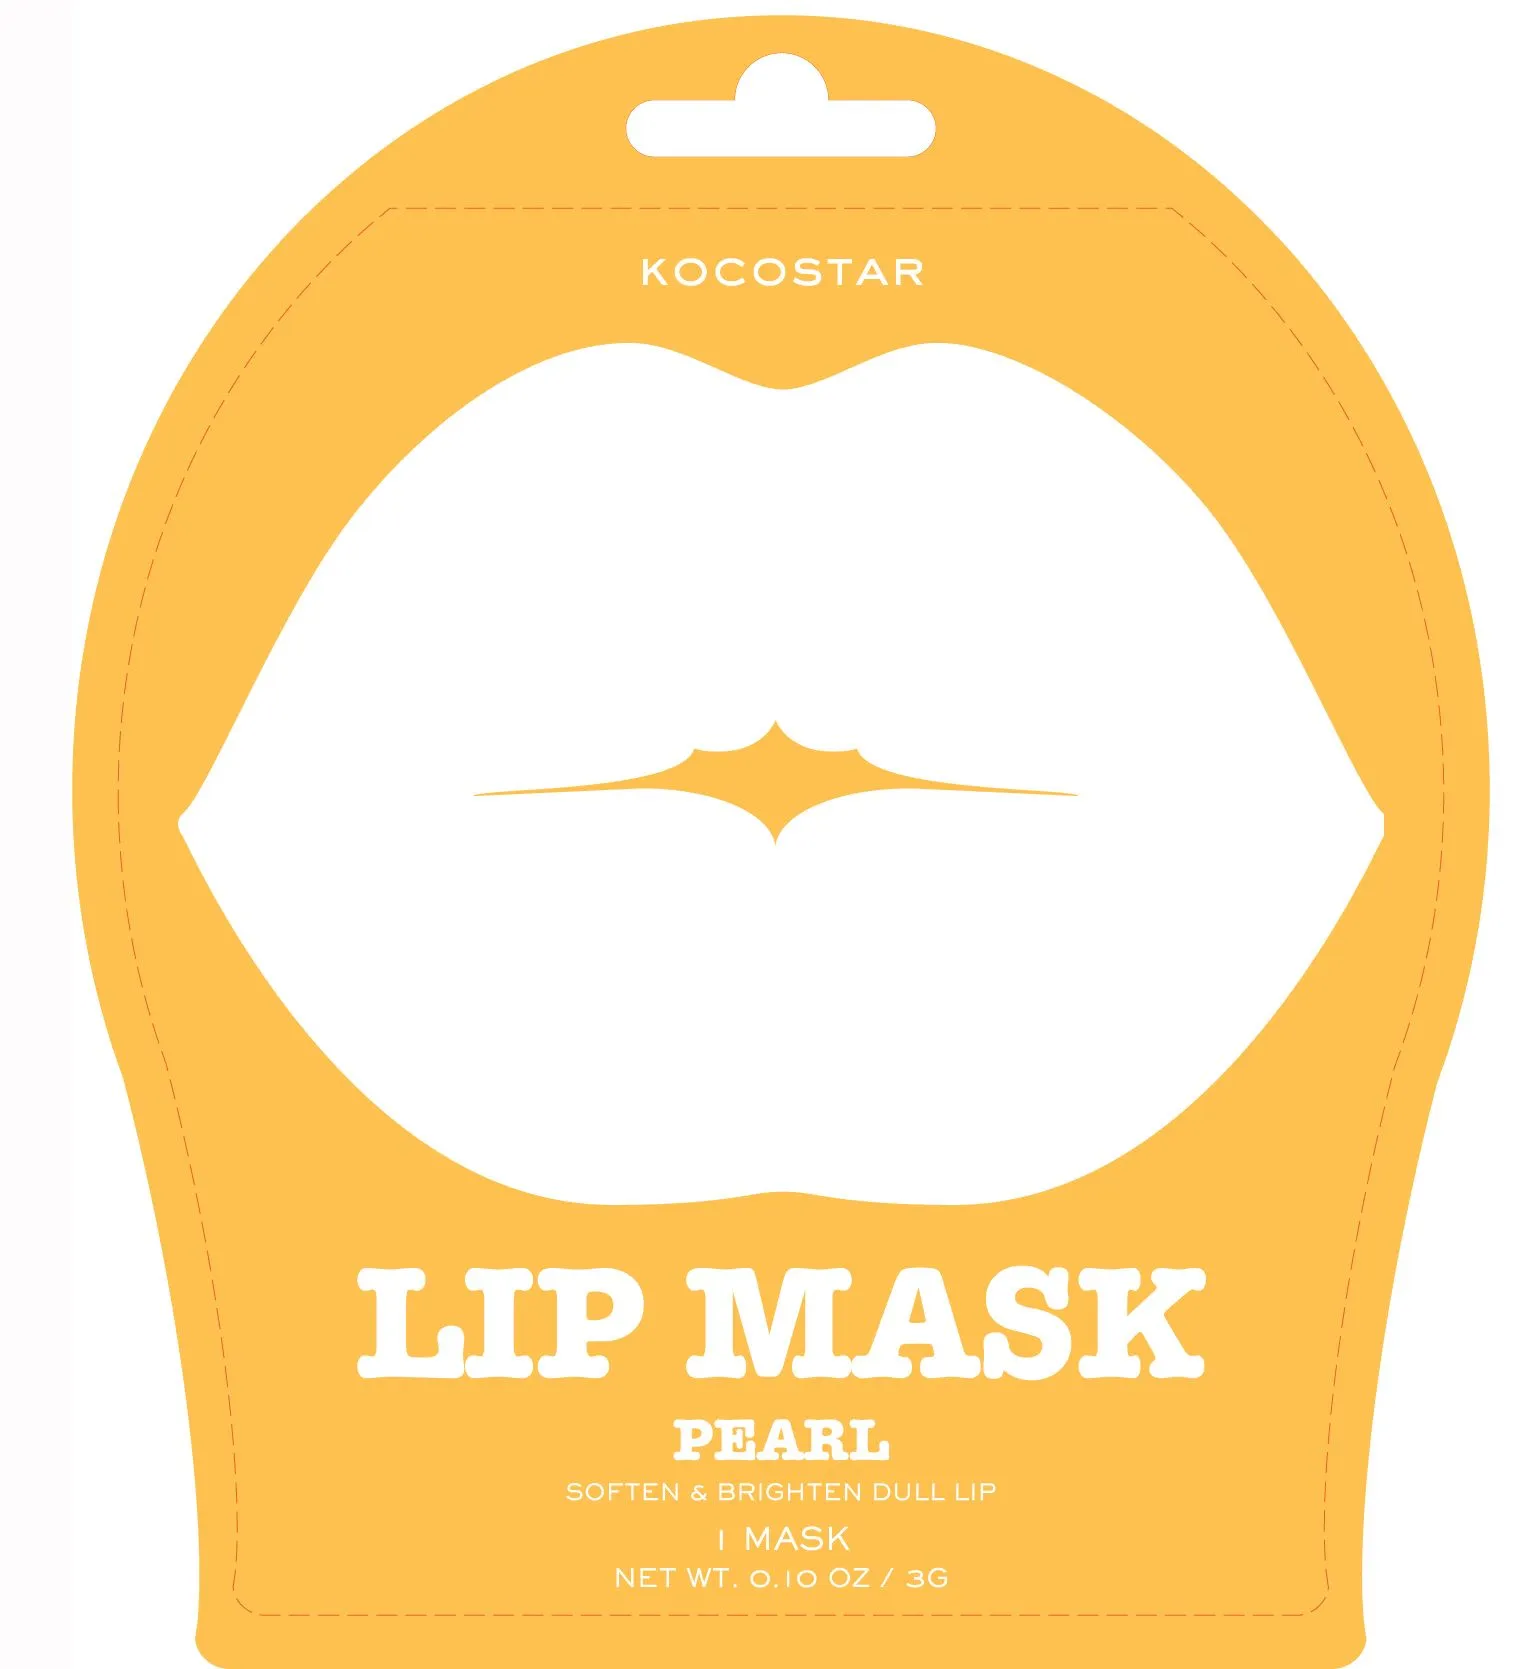 Kocostar Pearl Lip Mask 3 g / 1 sheet